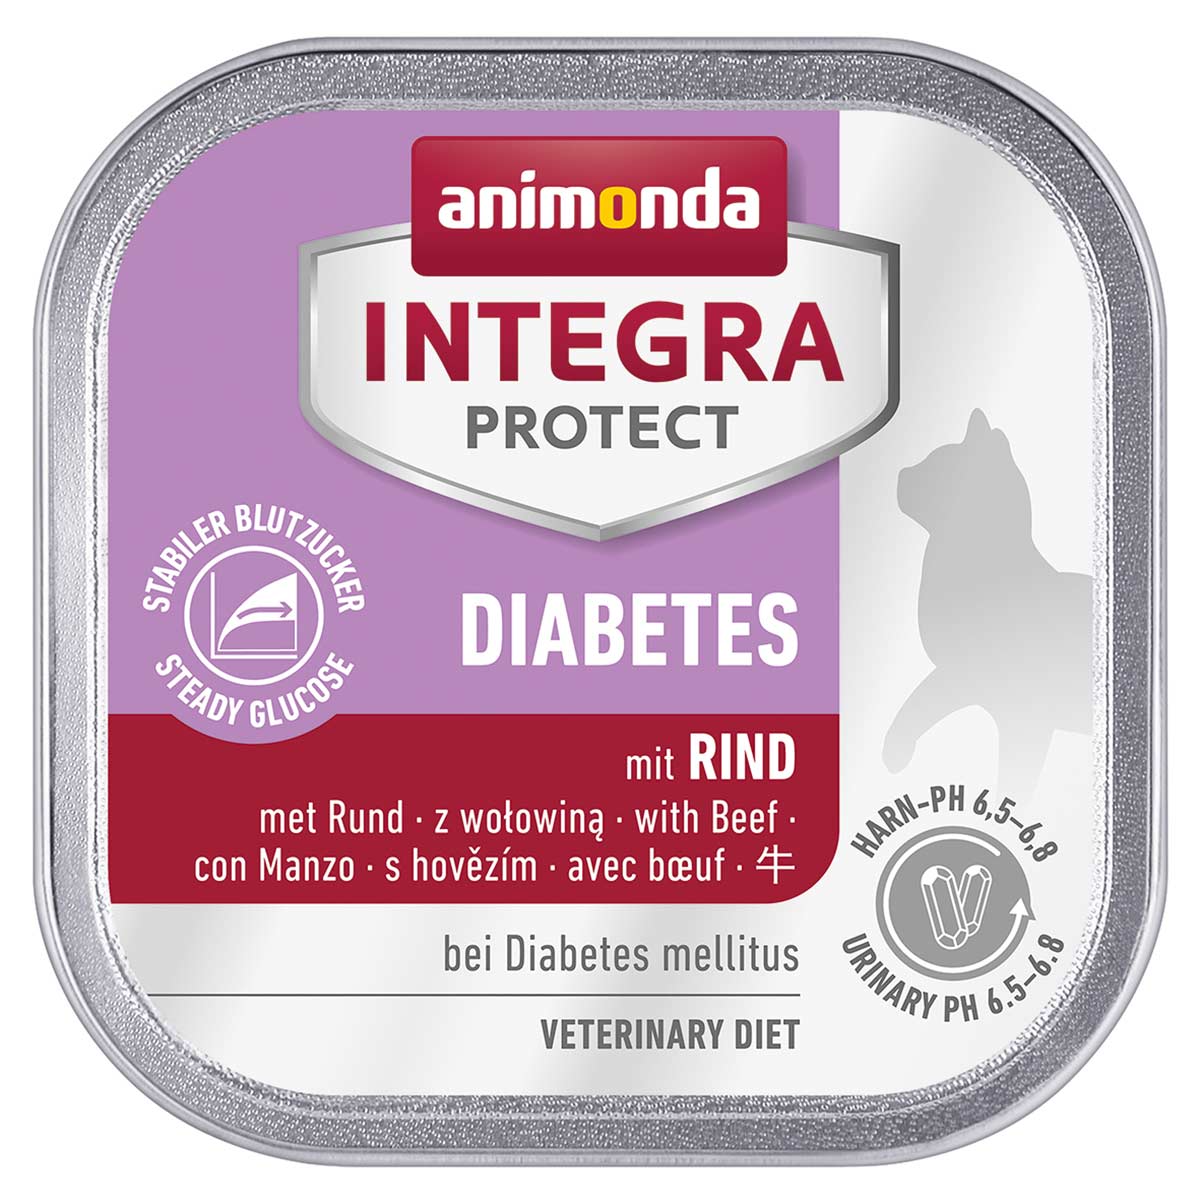 animonda INTEGRA PROTECT Diabetes mit Rind 32x100g von animonda Integra Protect